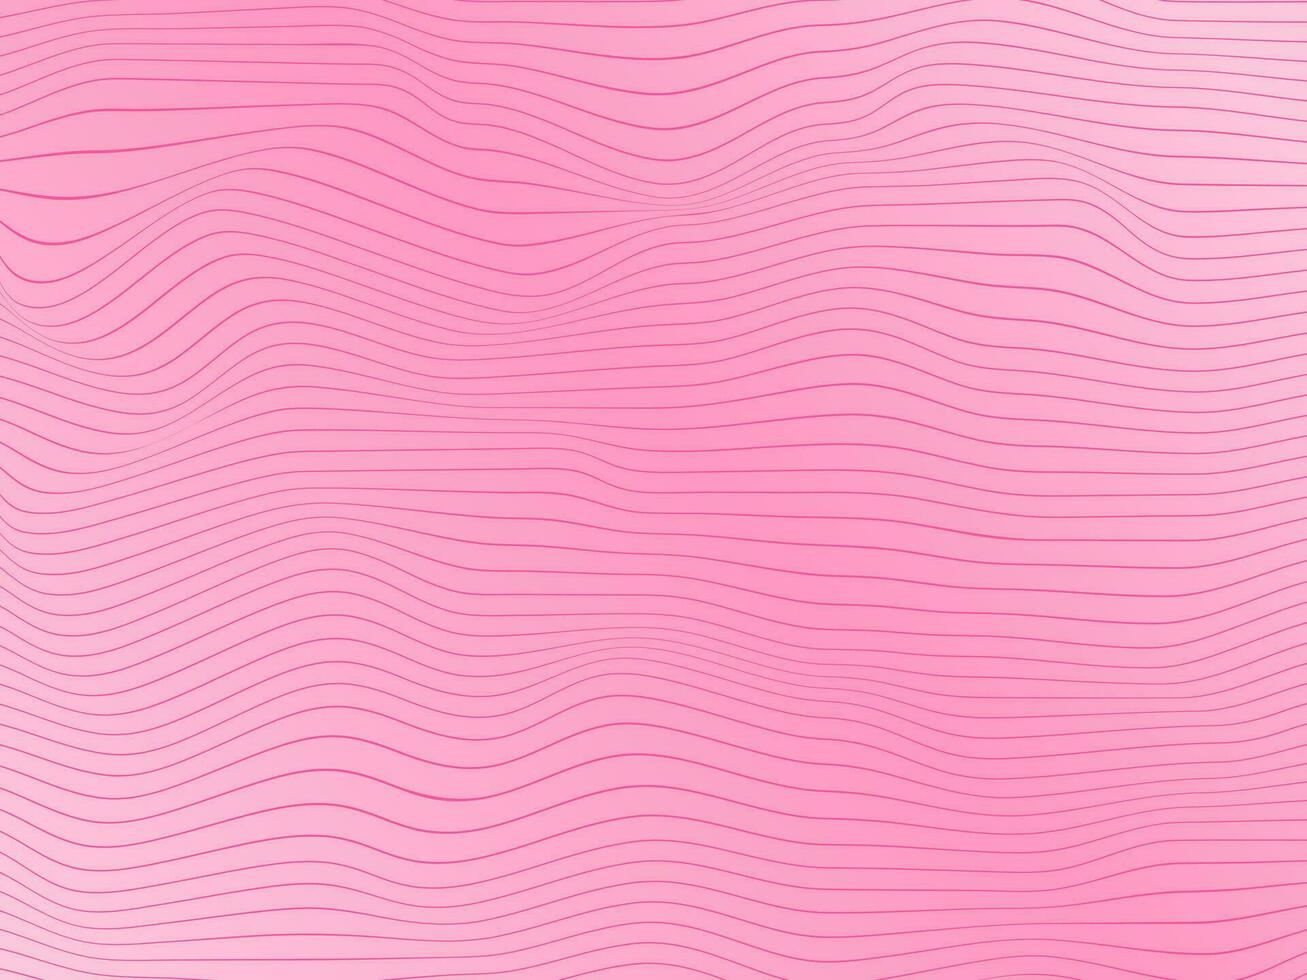 Pink trendy geometric background. Vector illustration for digital, design, poster, advertising